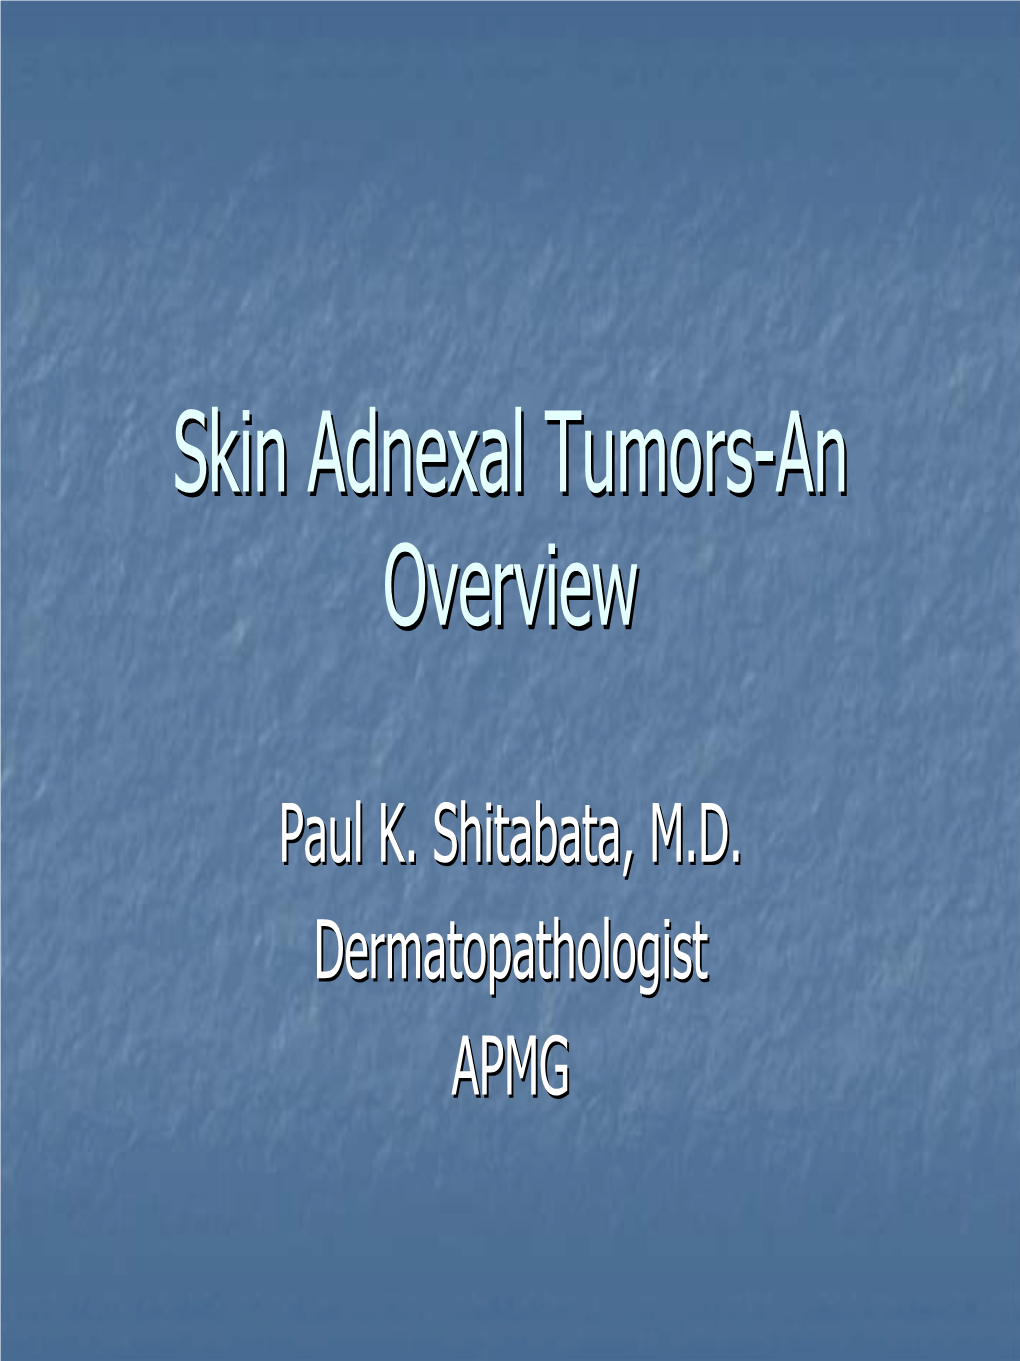 Skin Adnexal Tumors-An Overview